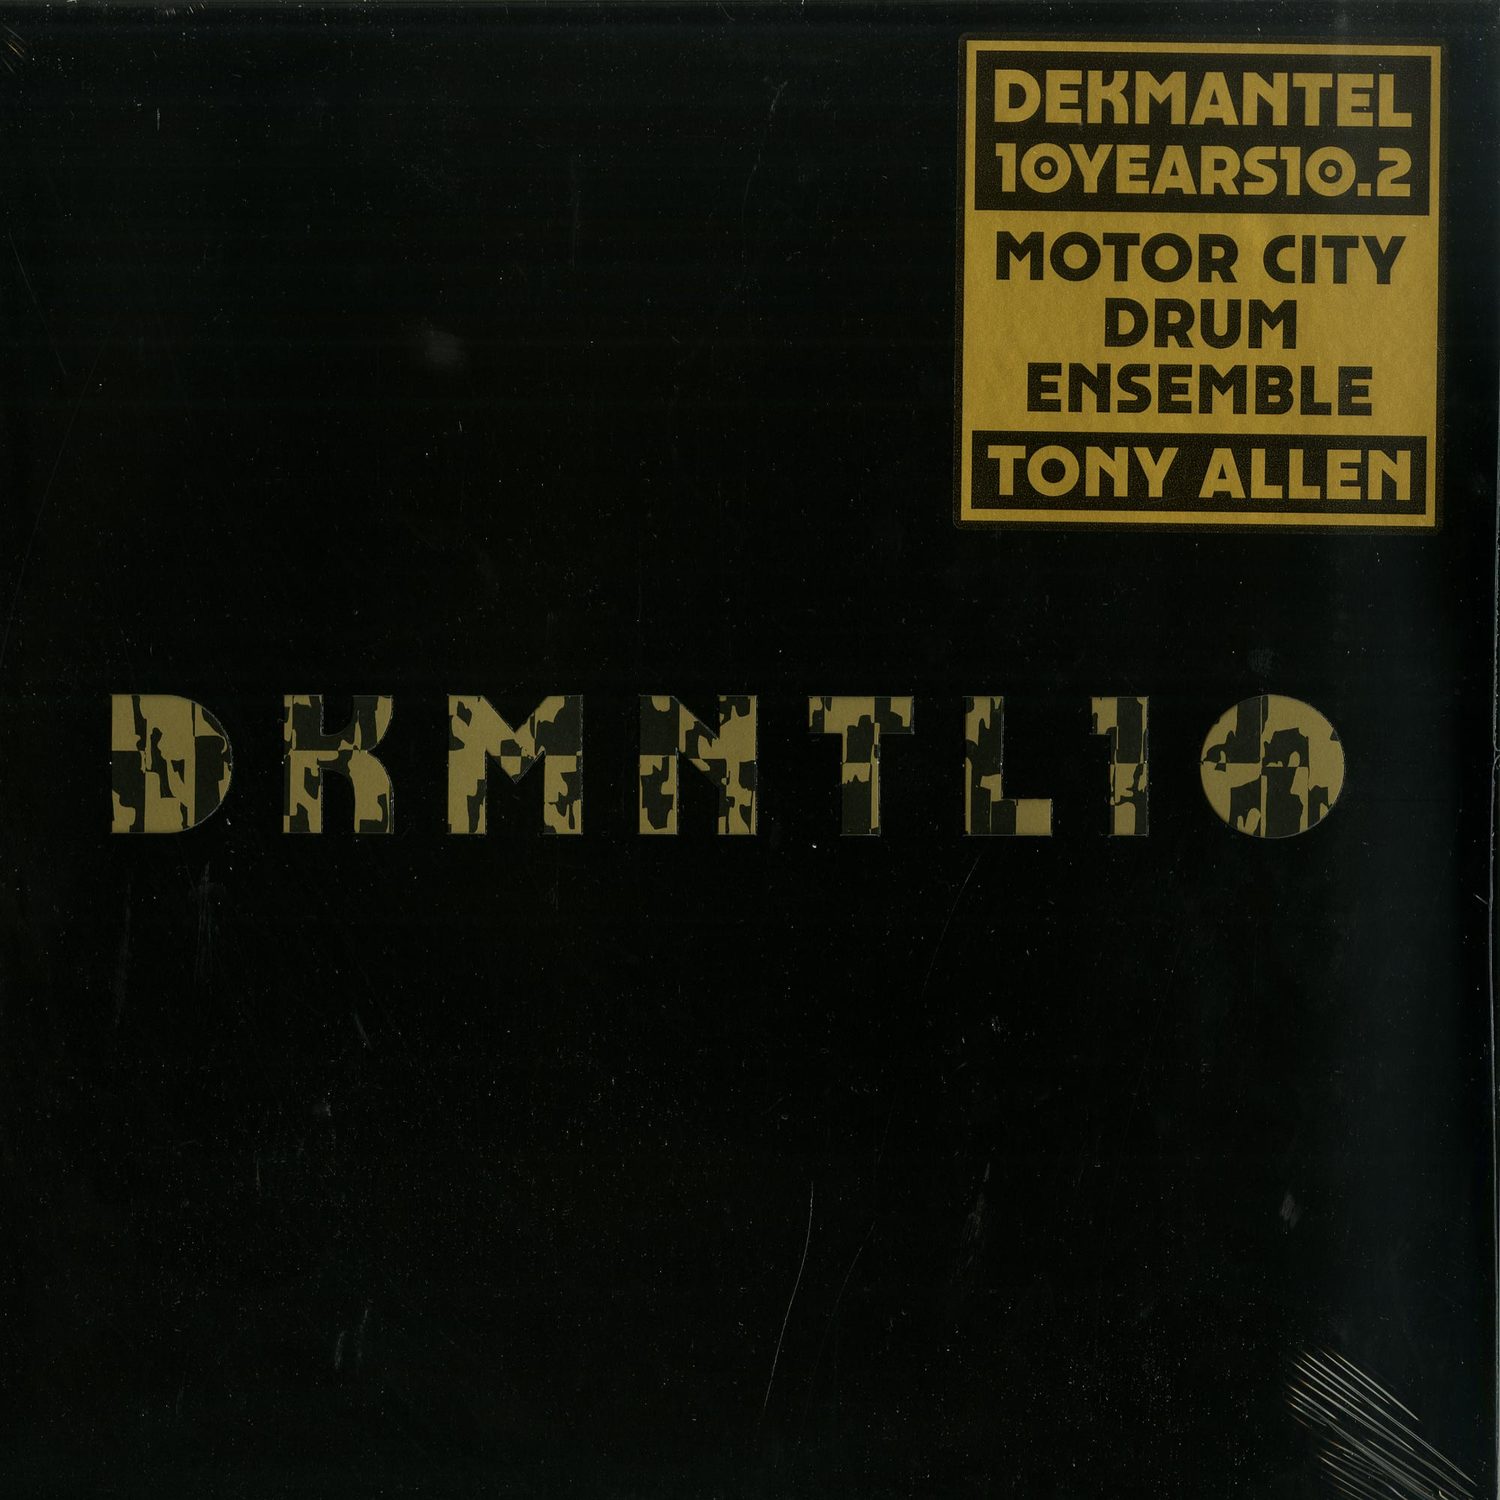 Tony Allen - DEKMANTEL 10 YEARS 10.2 